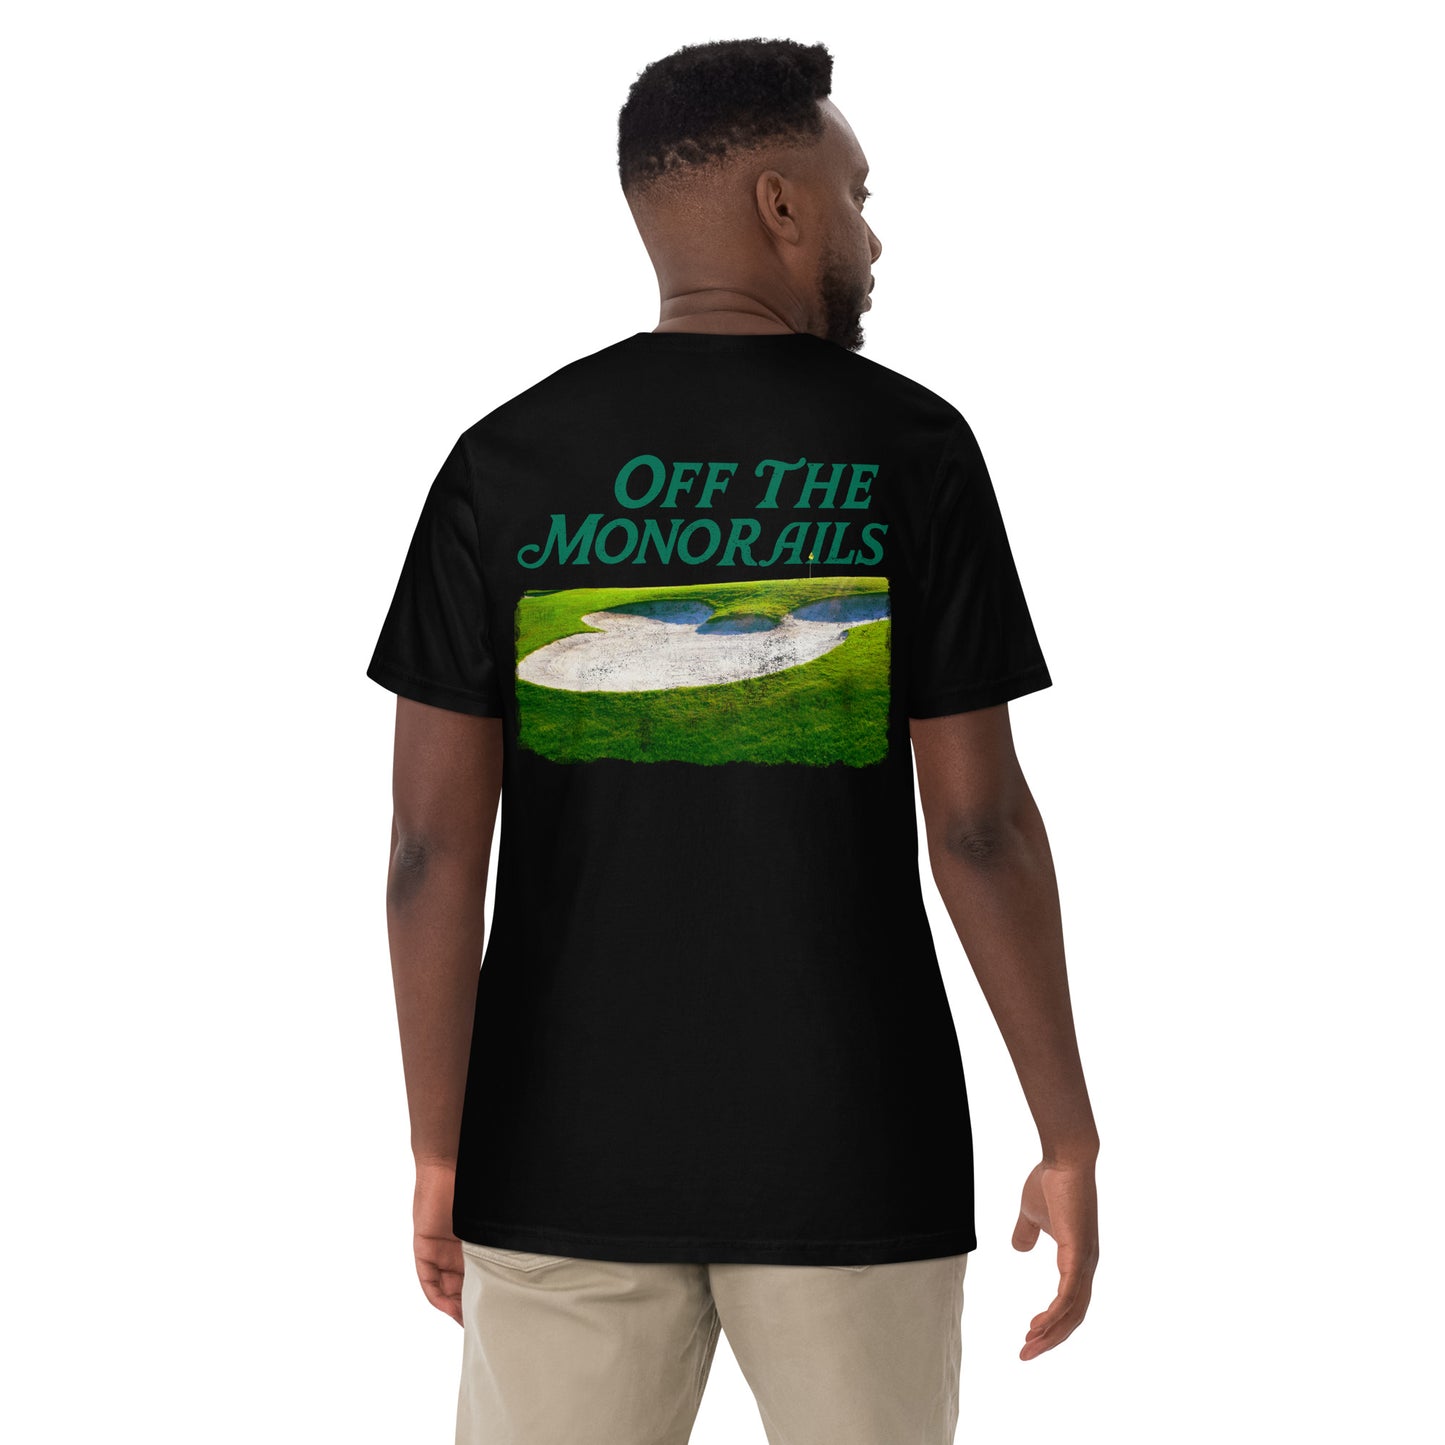 OTM Golf Traditions Tee